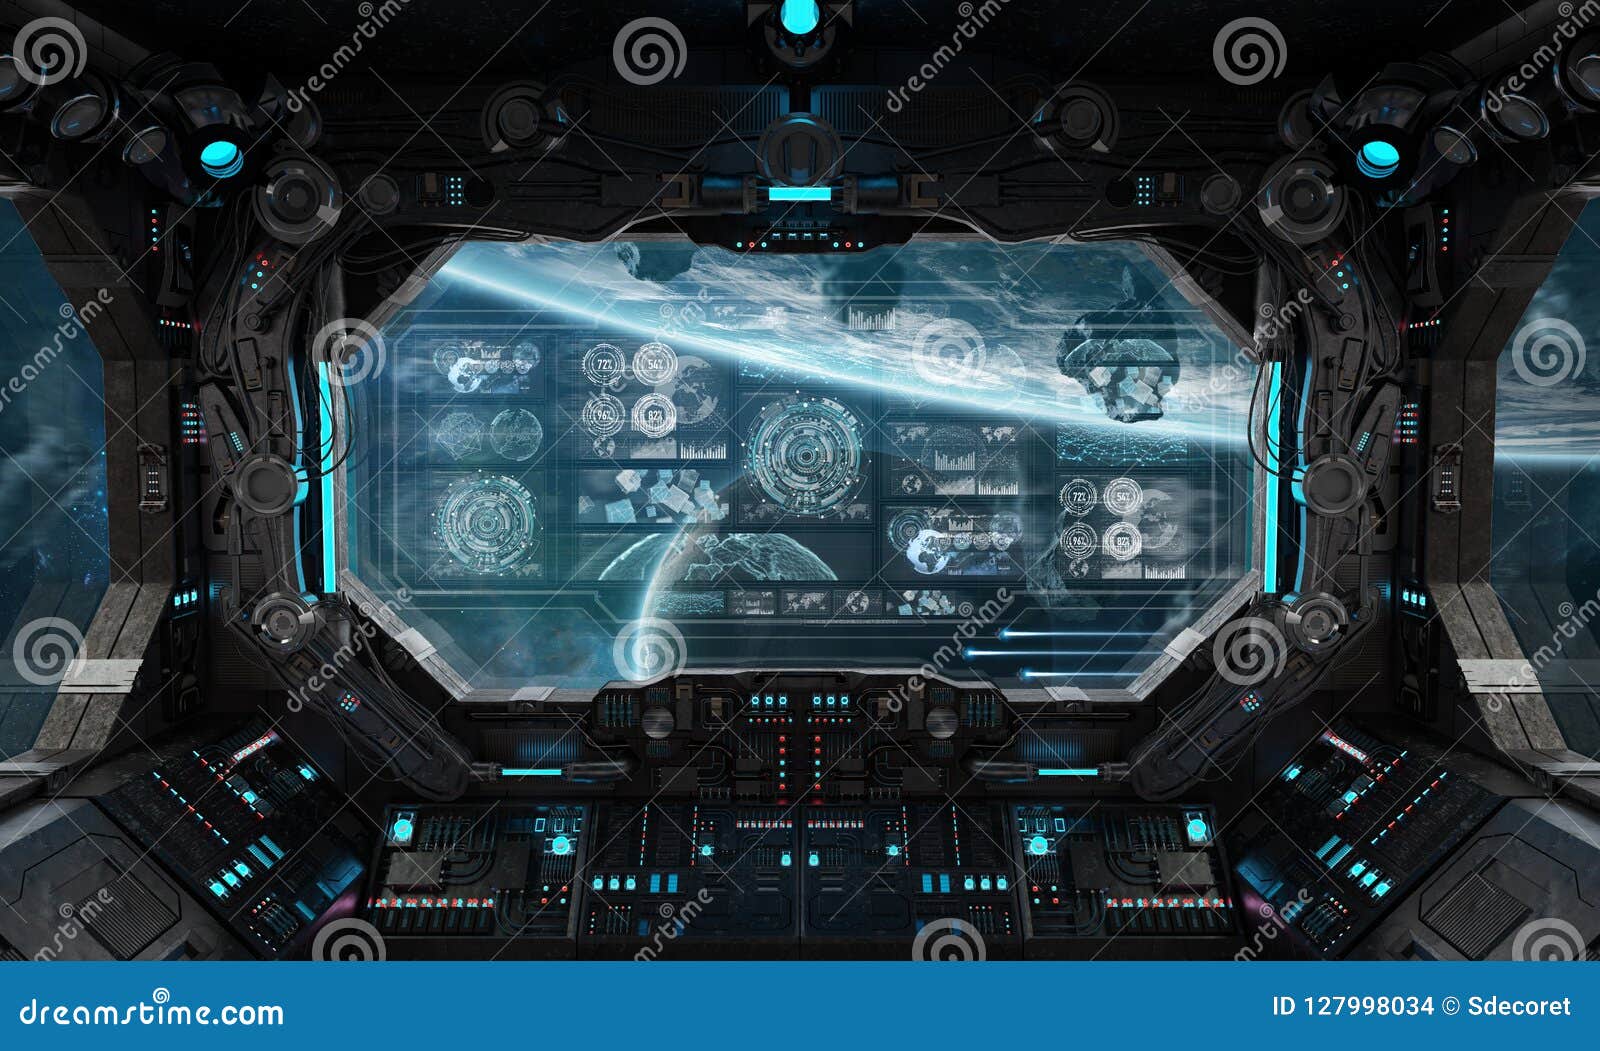 spaceship control panel texture